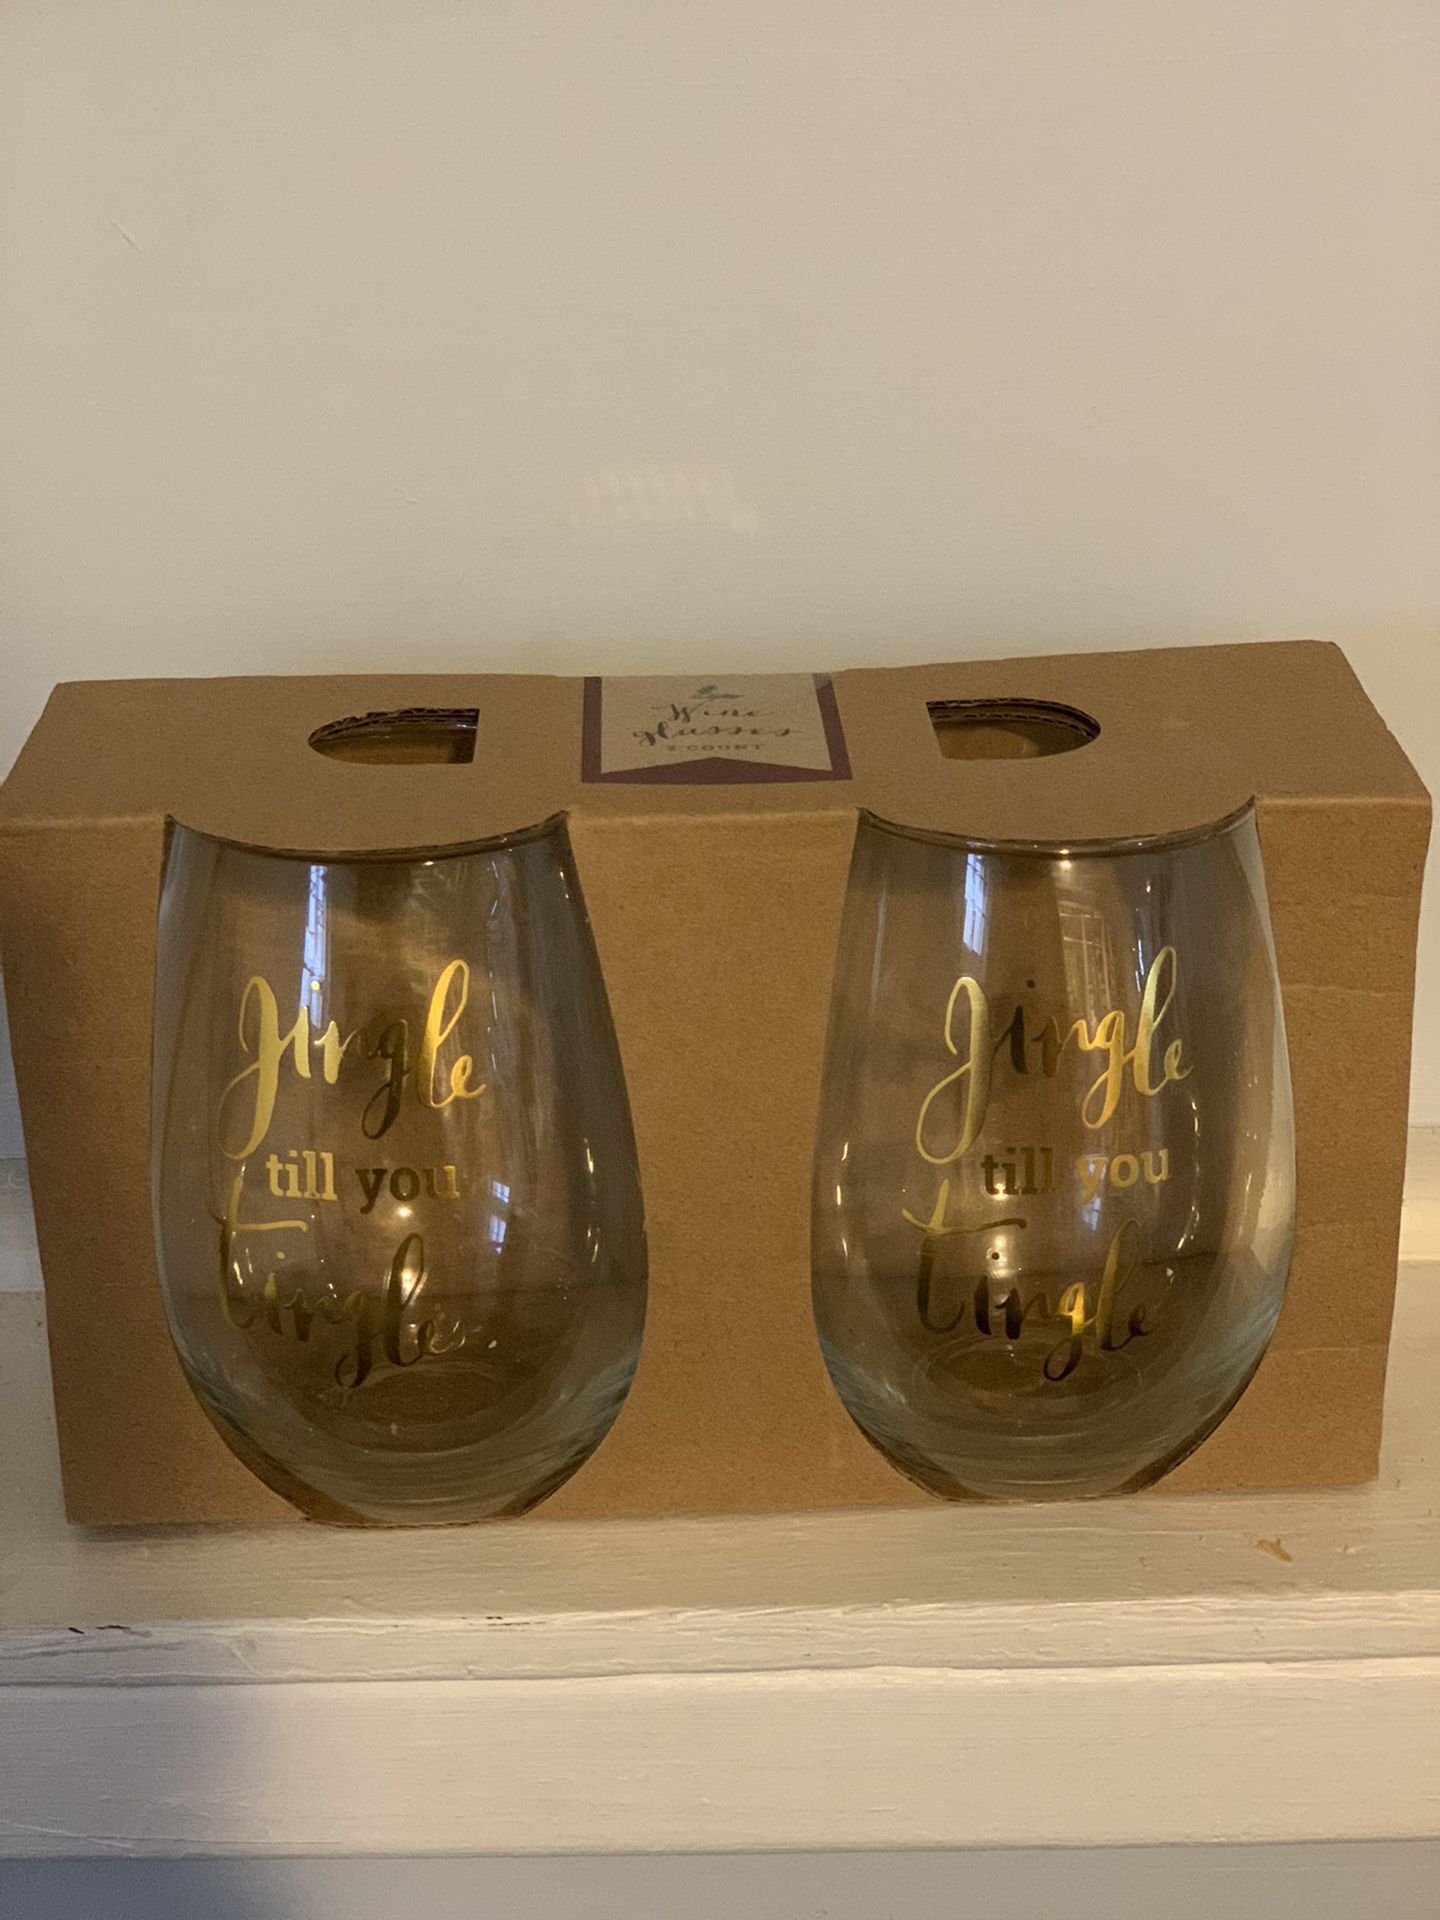 2 wine glasses